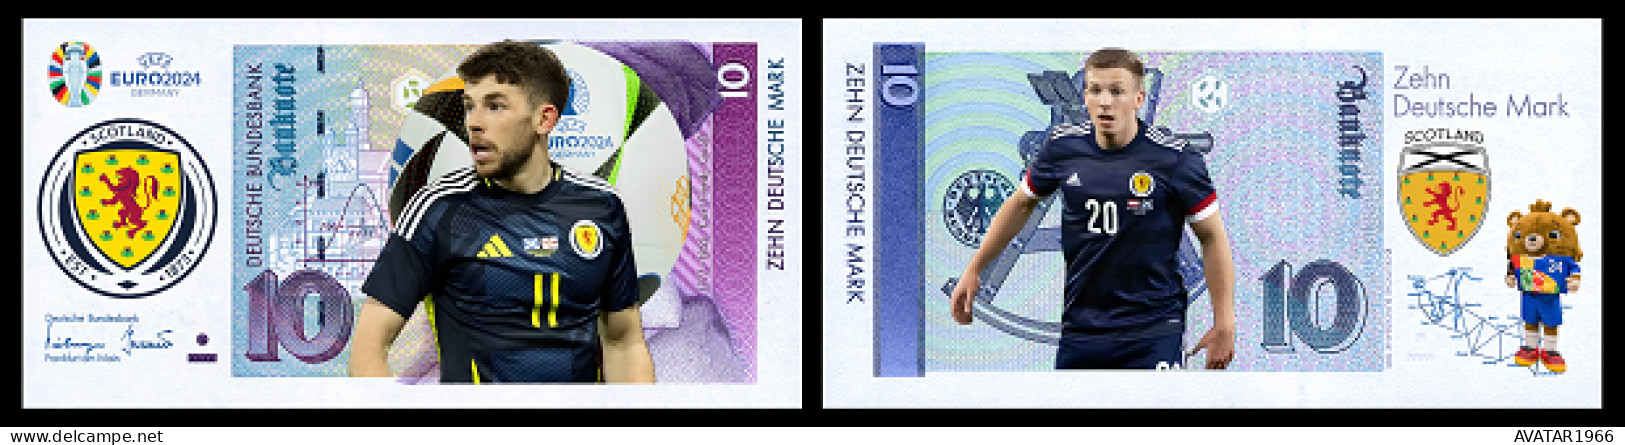 UEFA European Football Championship 2024 Qualified Country Scotland  8 Pieces Germany Fantasy Paper Money - Gedenkausgaben